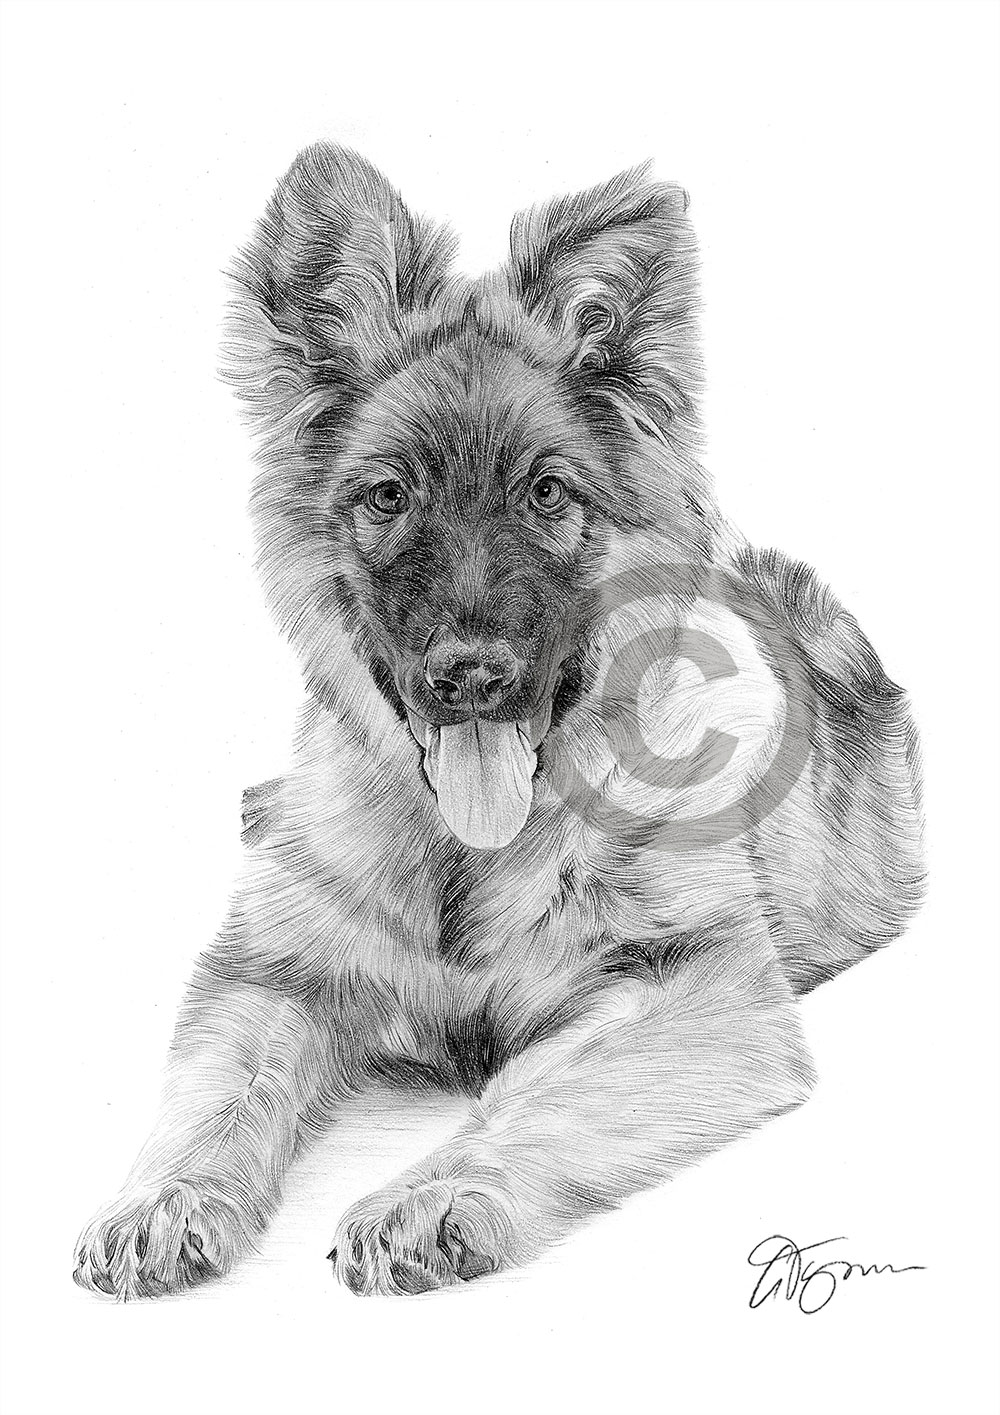 Pencil drawing of a German Shepherd puppy by artist Gary Tymon